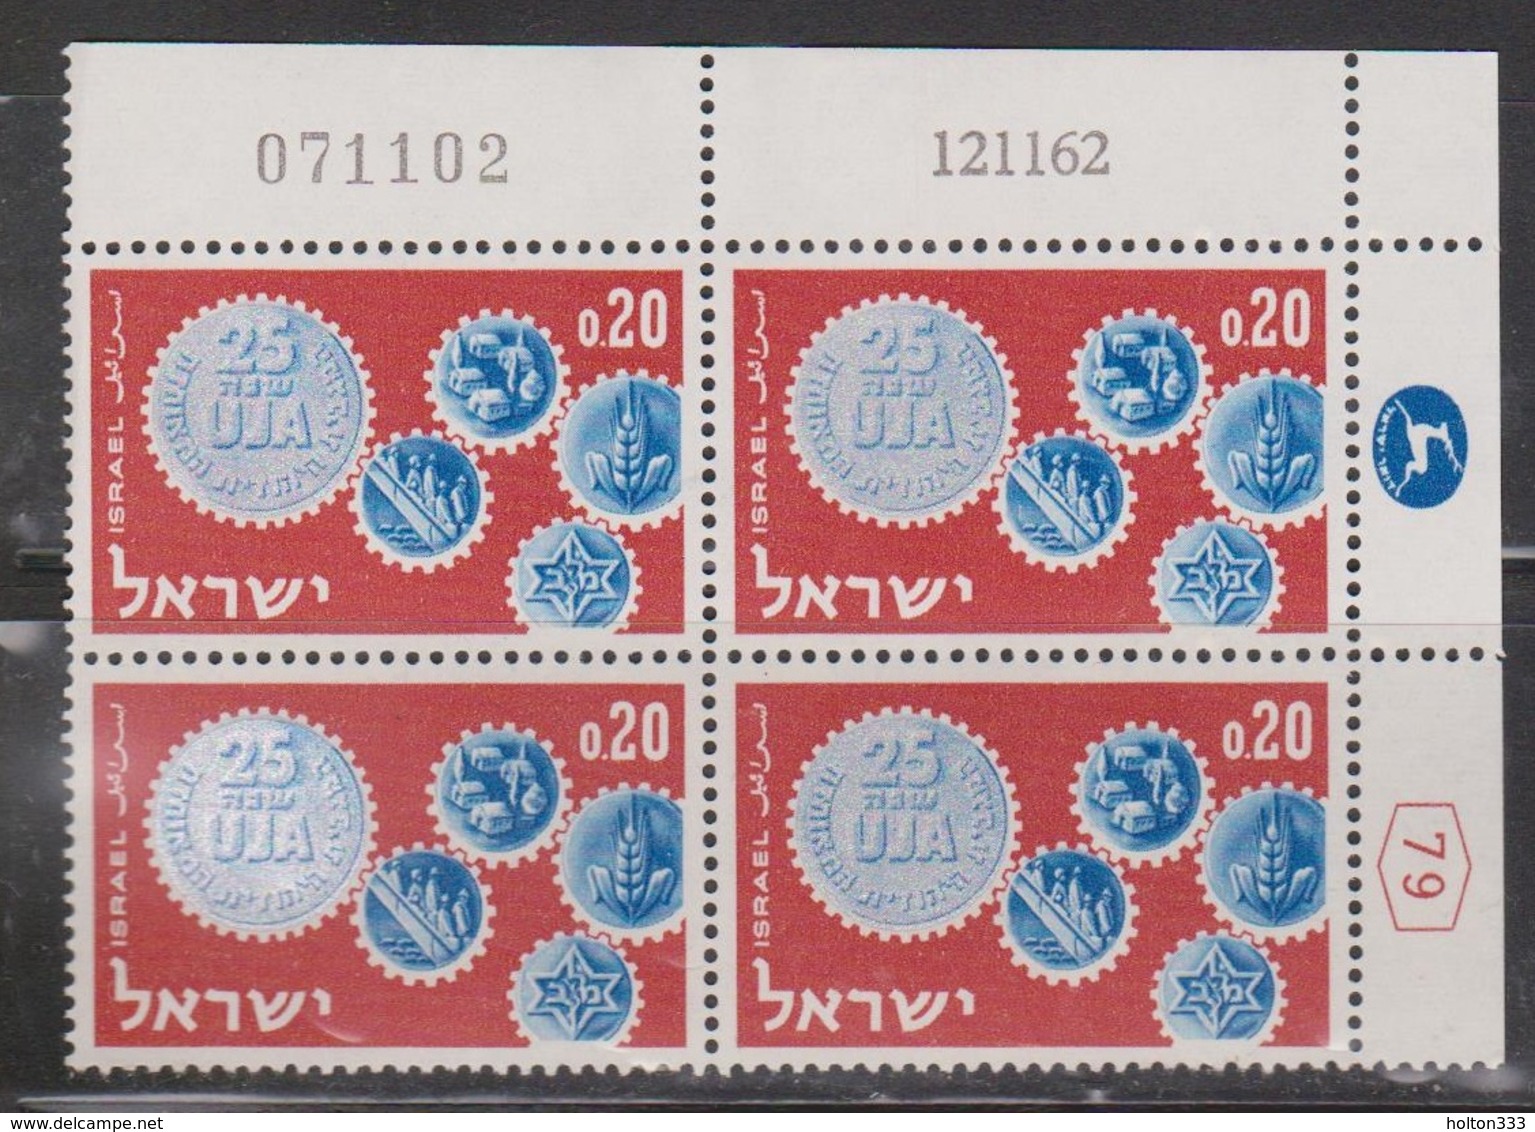 ISRAEL Scott # 229 MNH Plate Block - United Jewish Appeal - Unused Stamps (with Tabs)